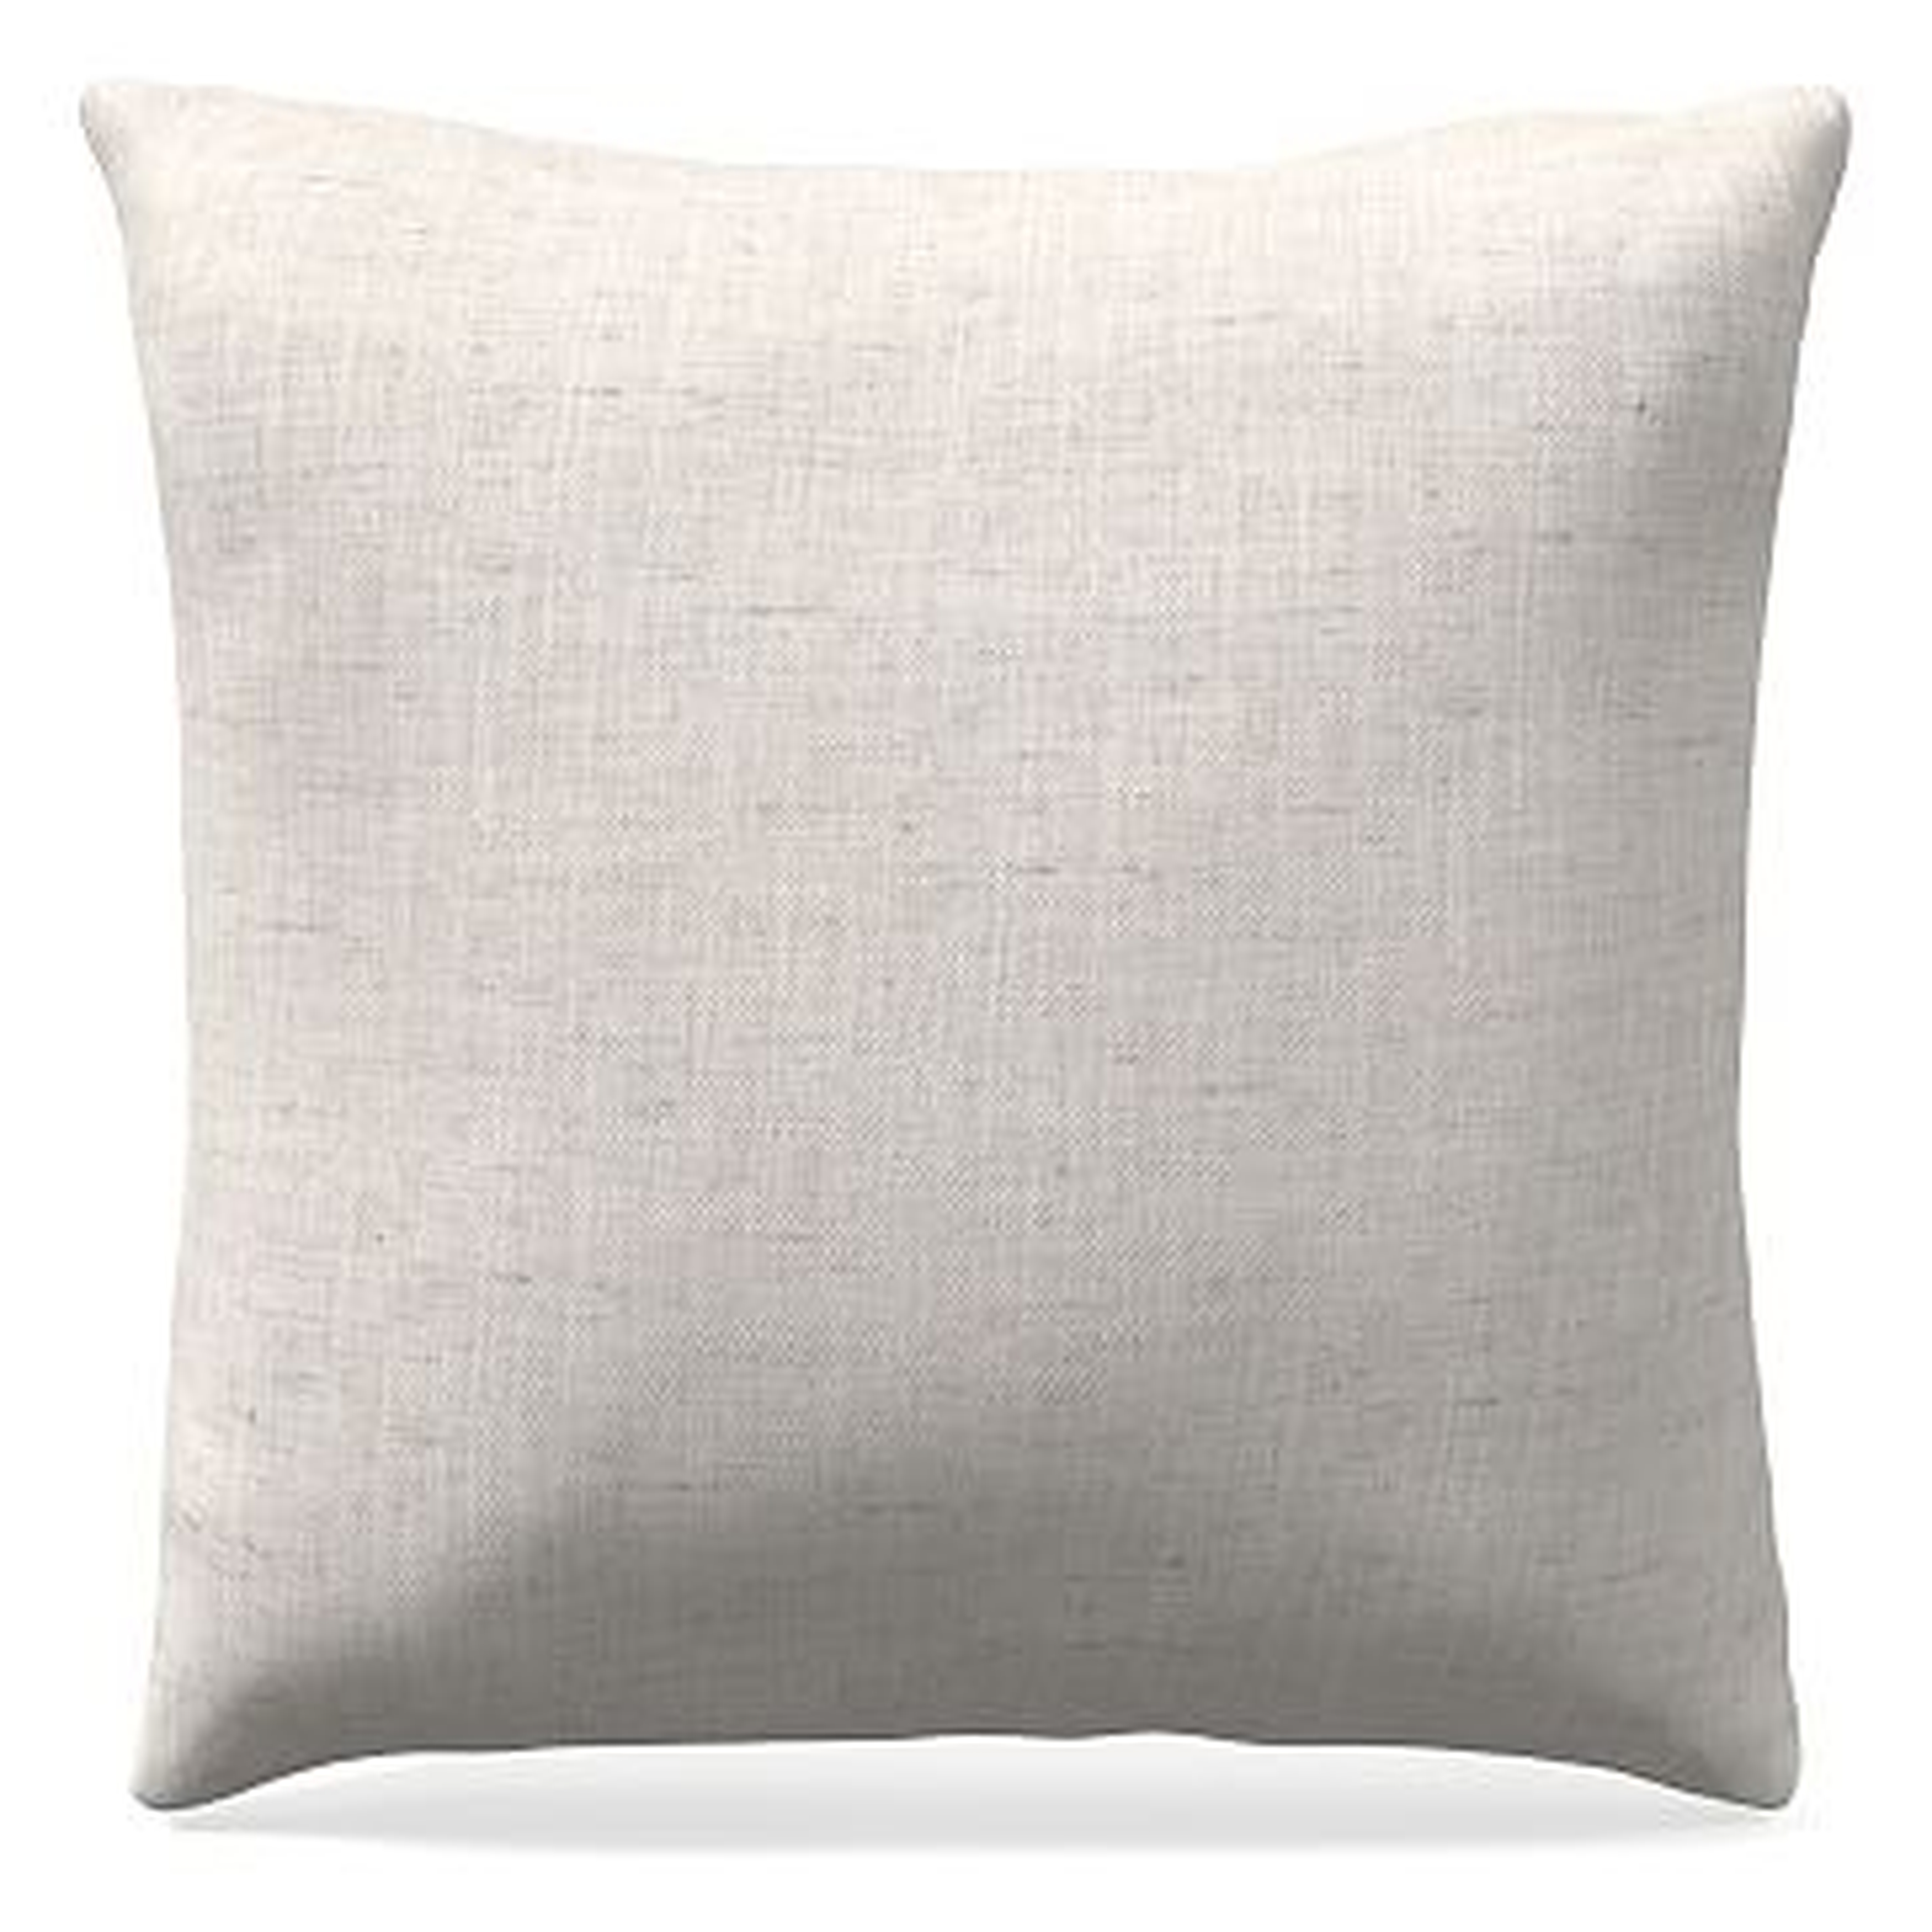 26"x 26" Pillow, N/A, Performance Coastal Linen, White, N/A - West Elm